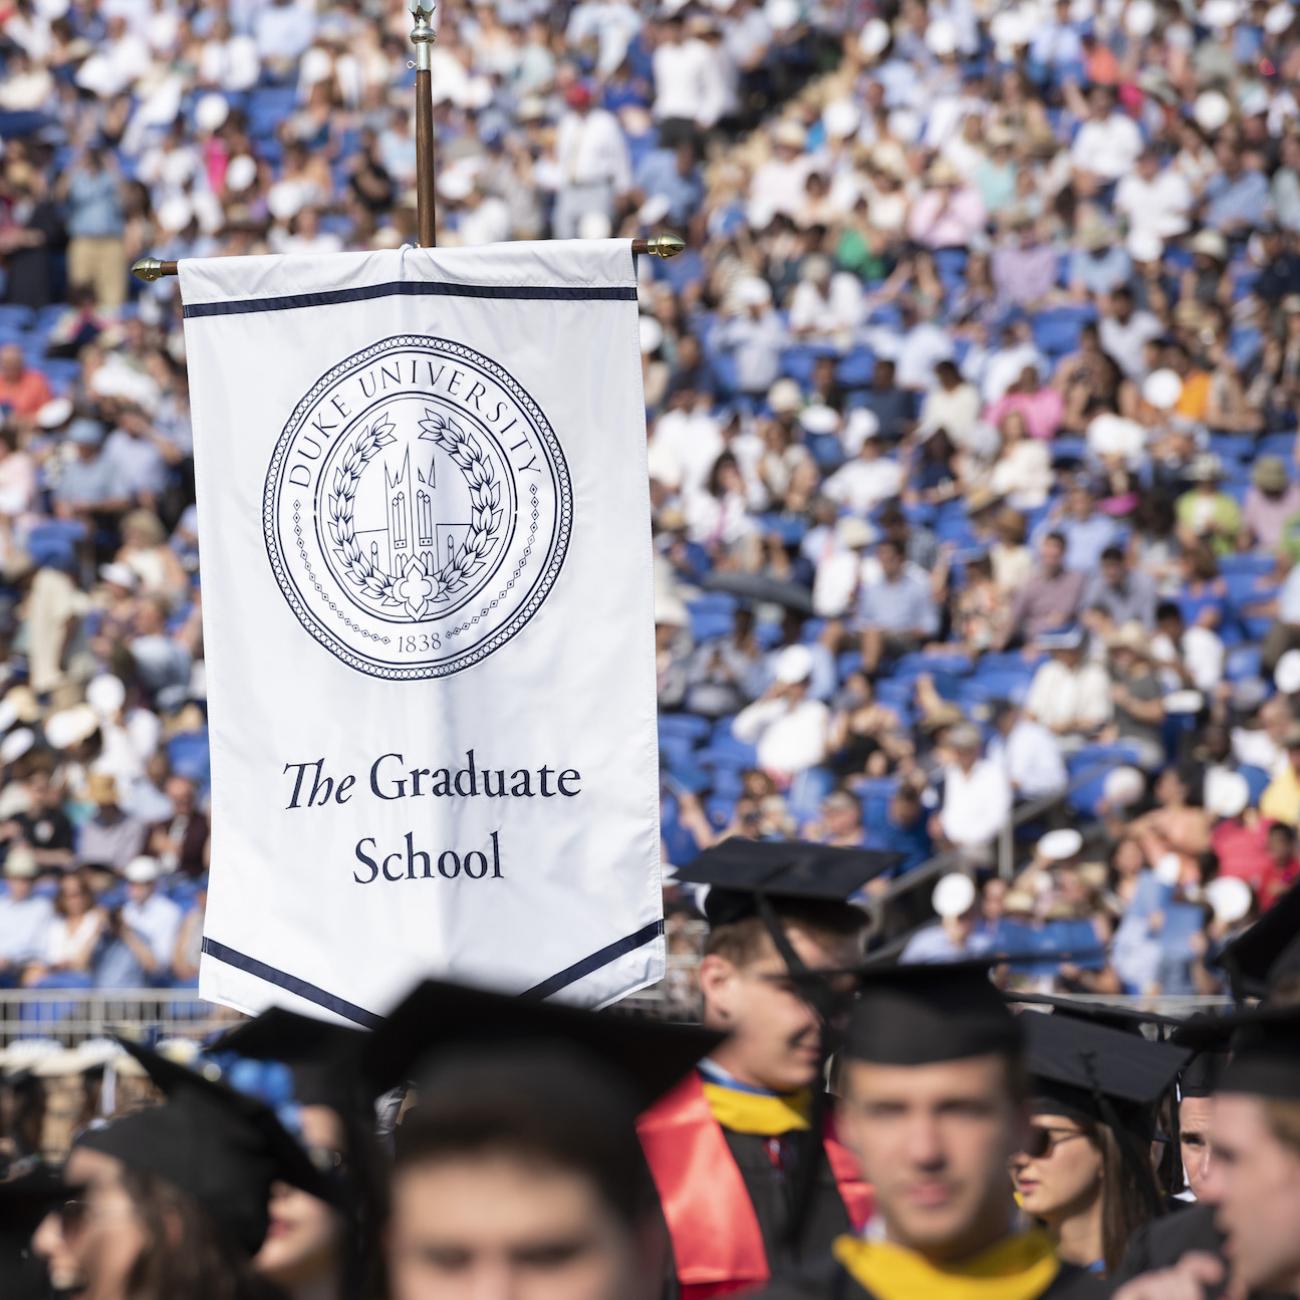 Graduate school banner at graduation in sea of graduates.